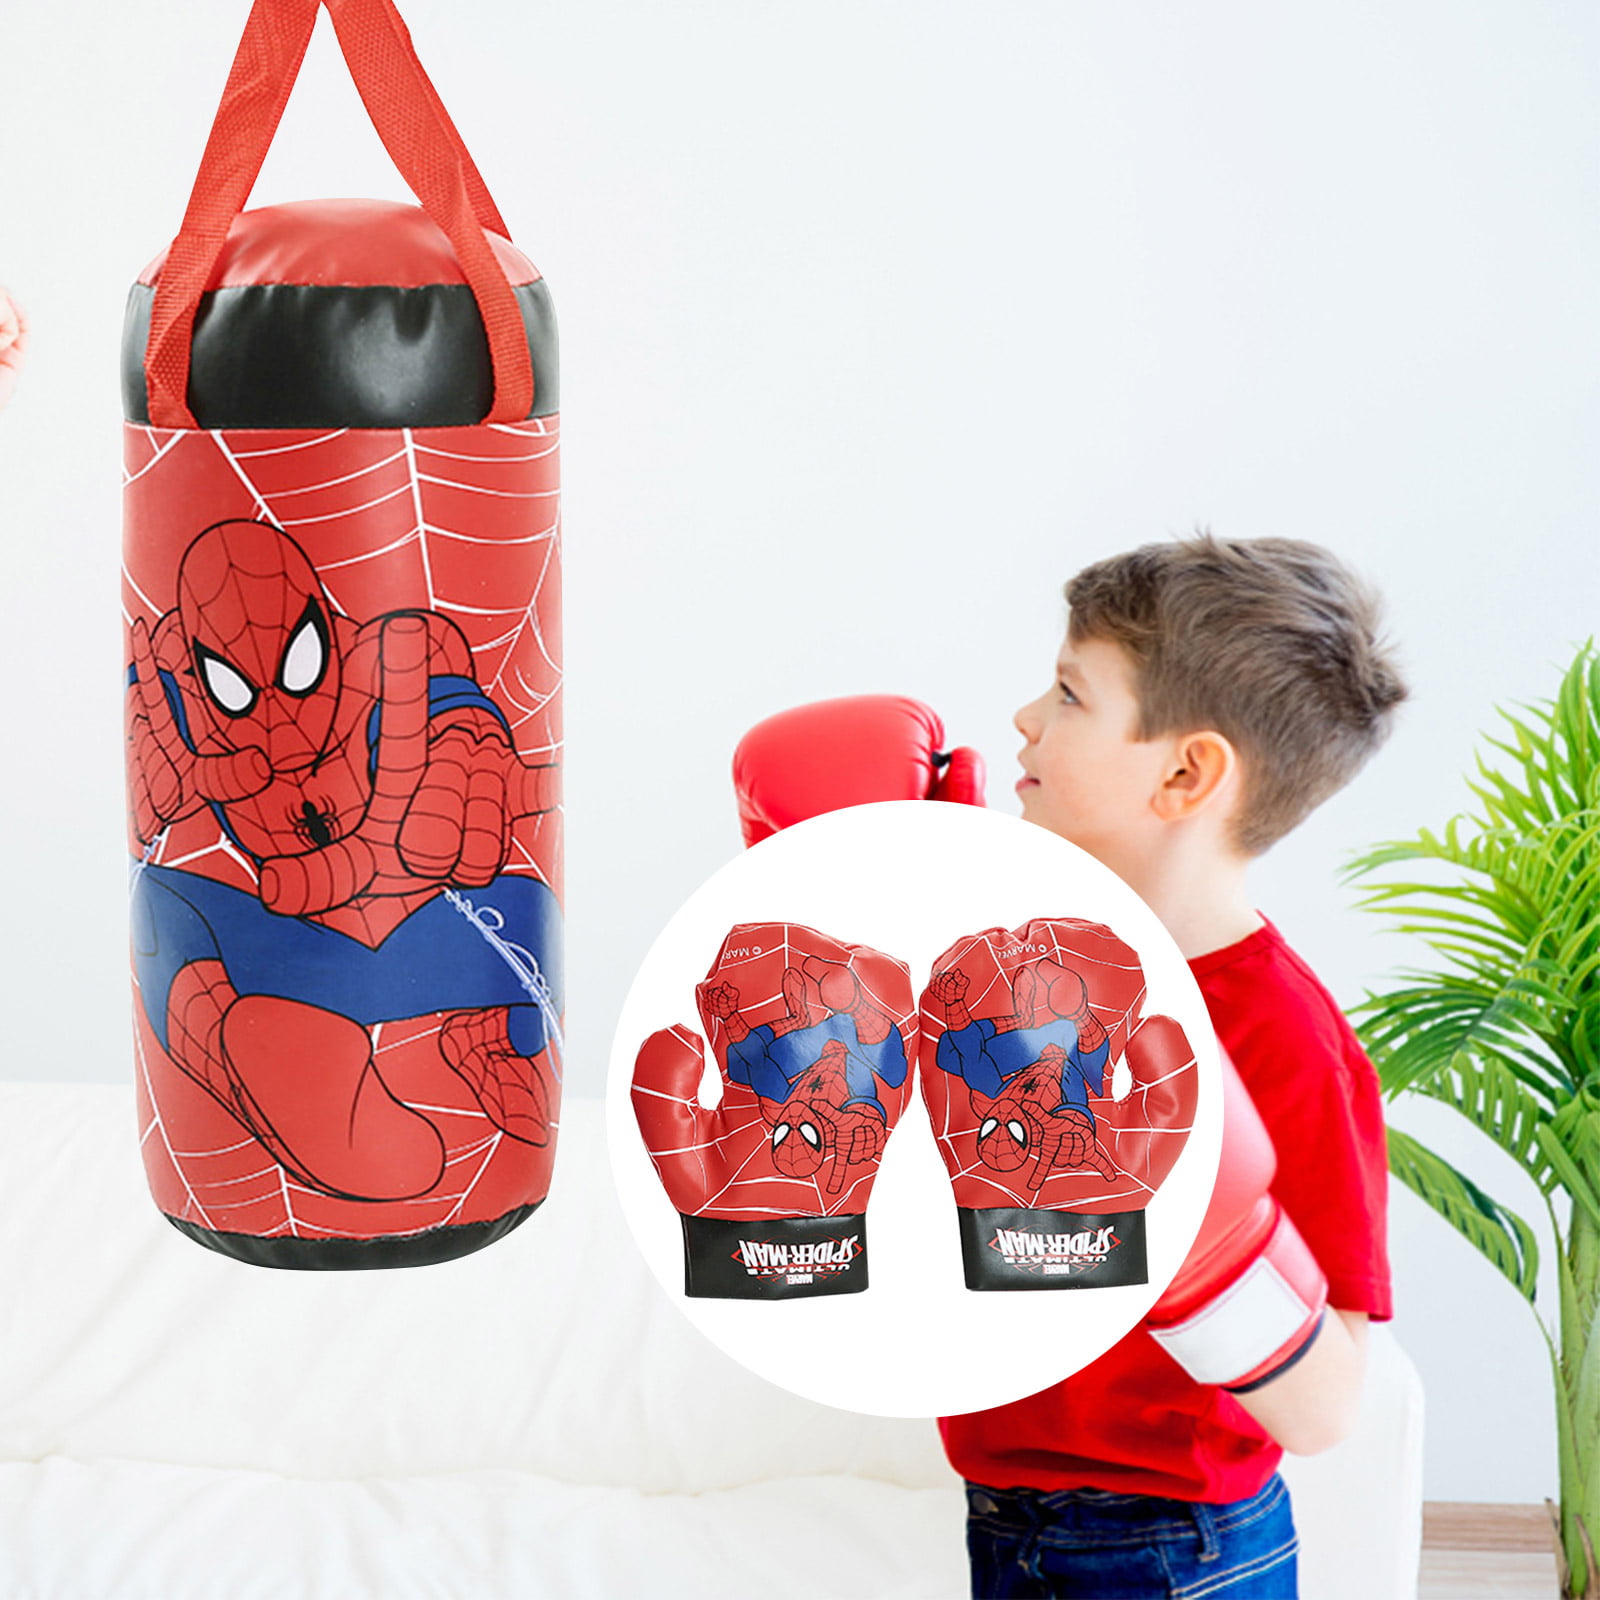 Spiderman Avengers Kids Boxing Punching Bag Gloves Set Child Exercise Toys Gifts 